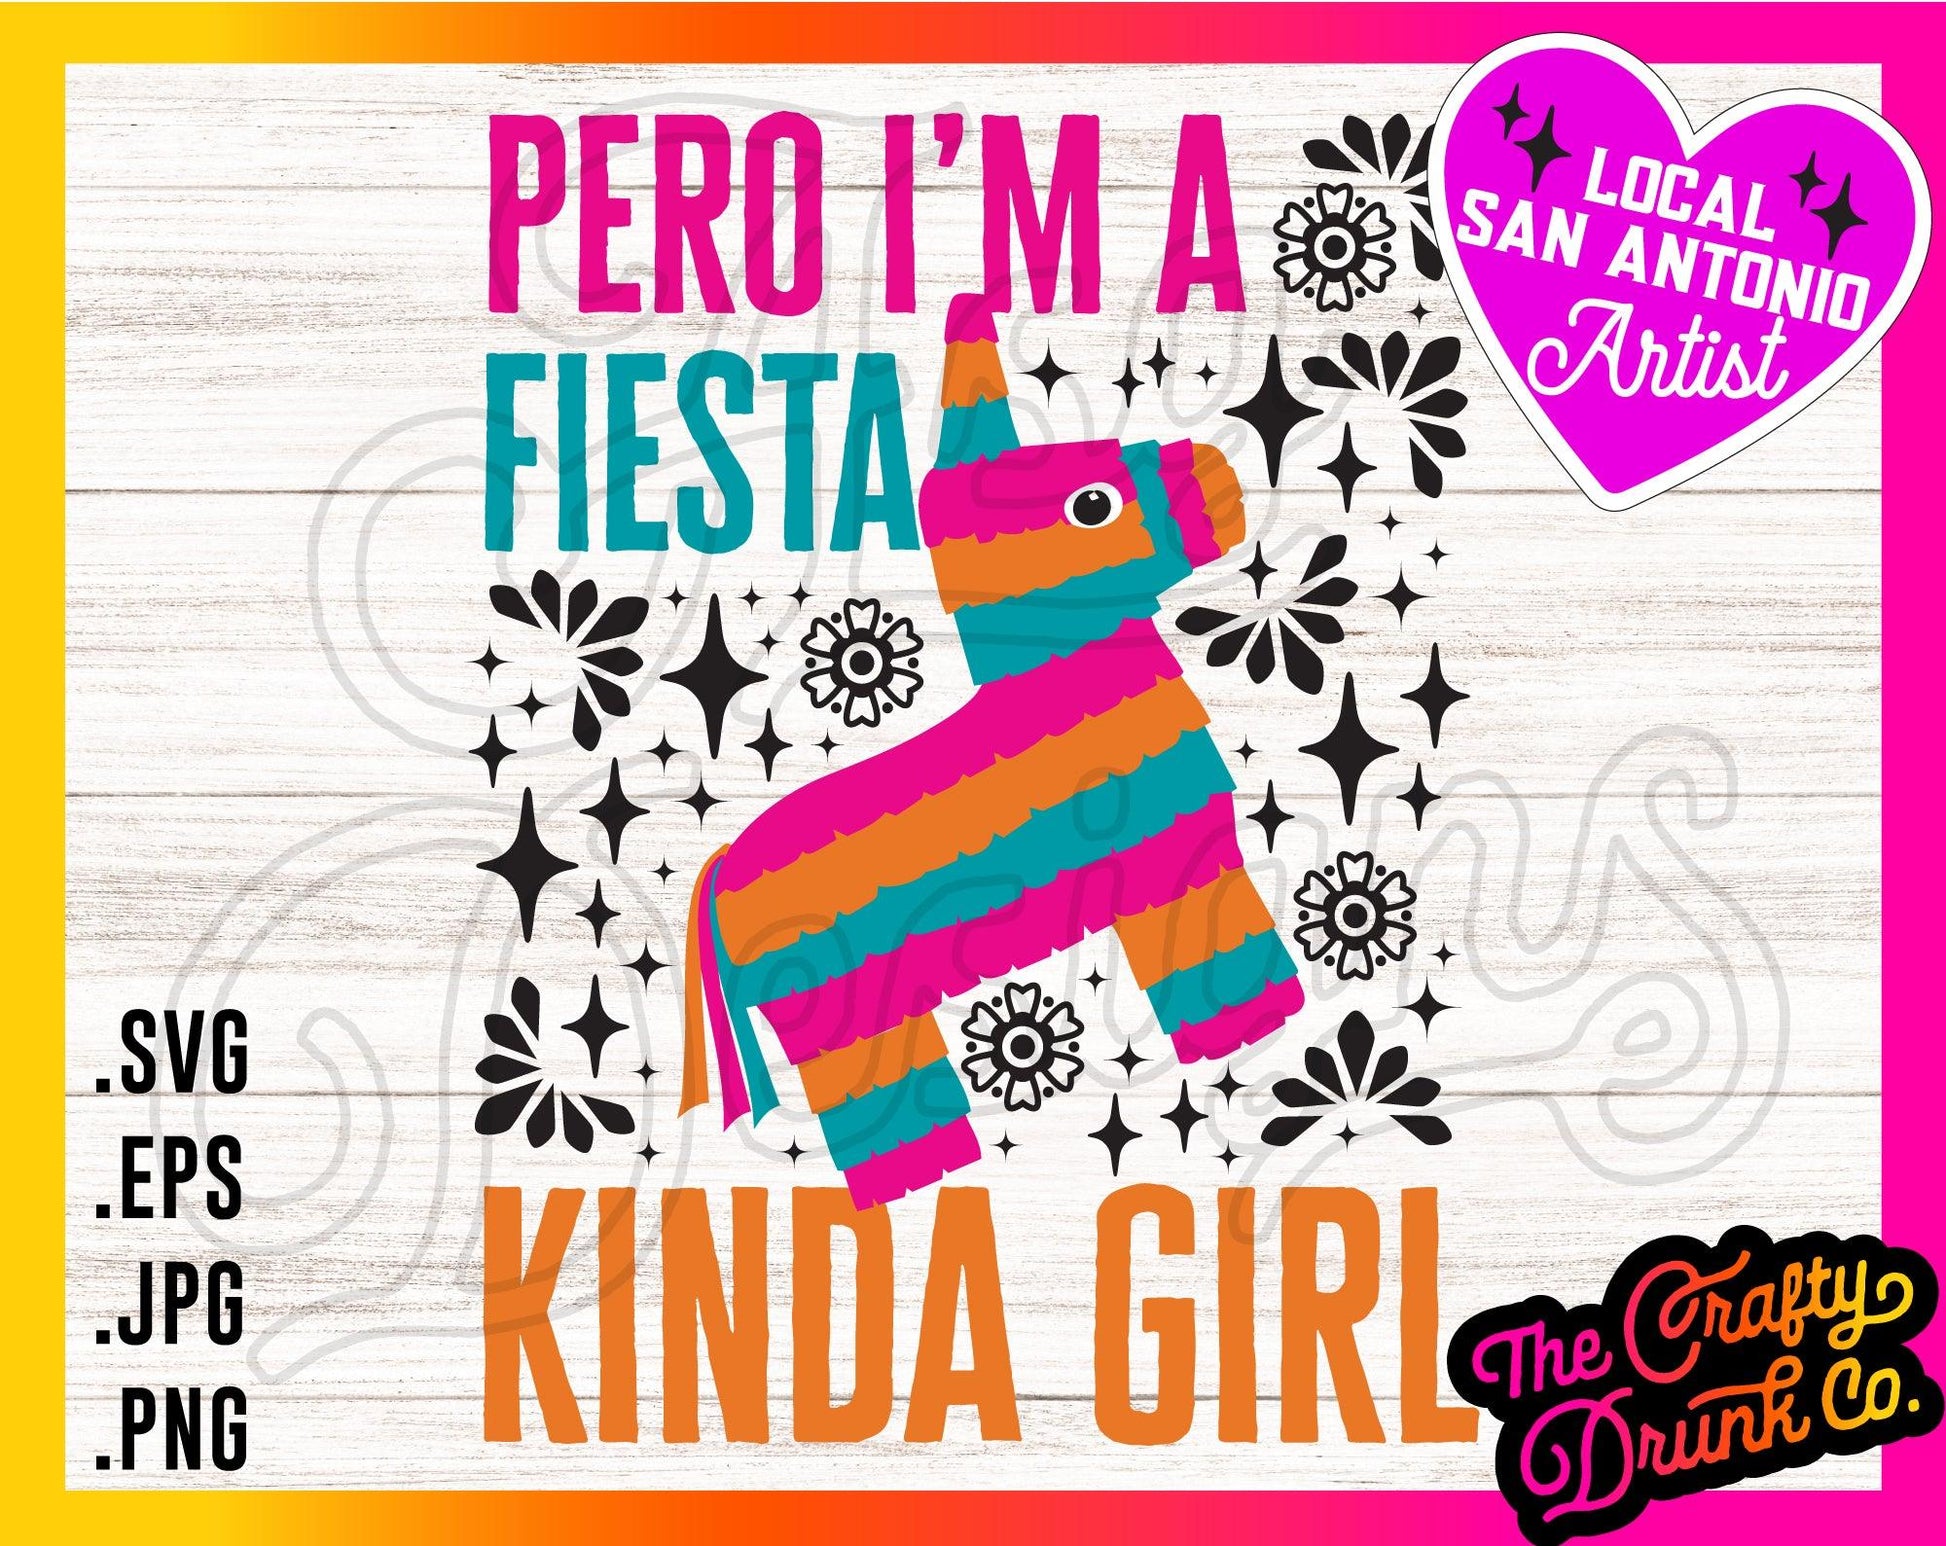 Pero I'm a Fiesta Kinda Girl - TheCraftyDrunkCo